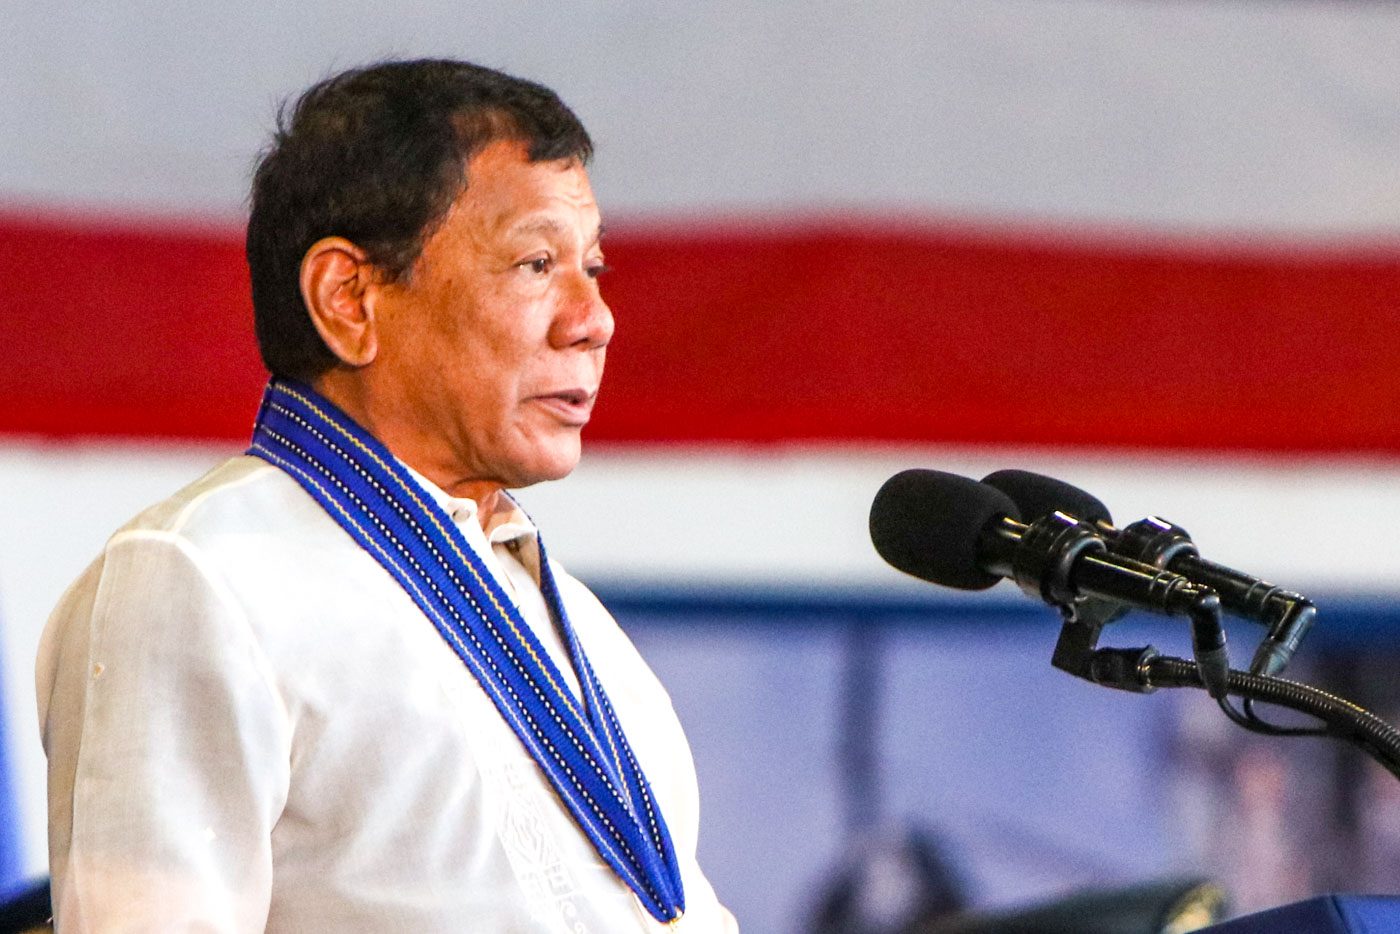 After drawing flak, Duterte makes new rape joke